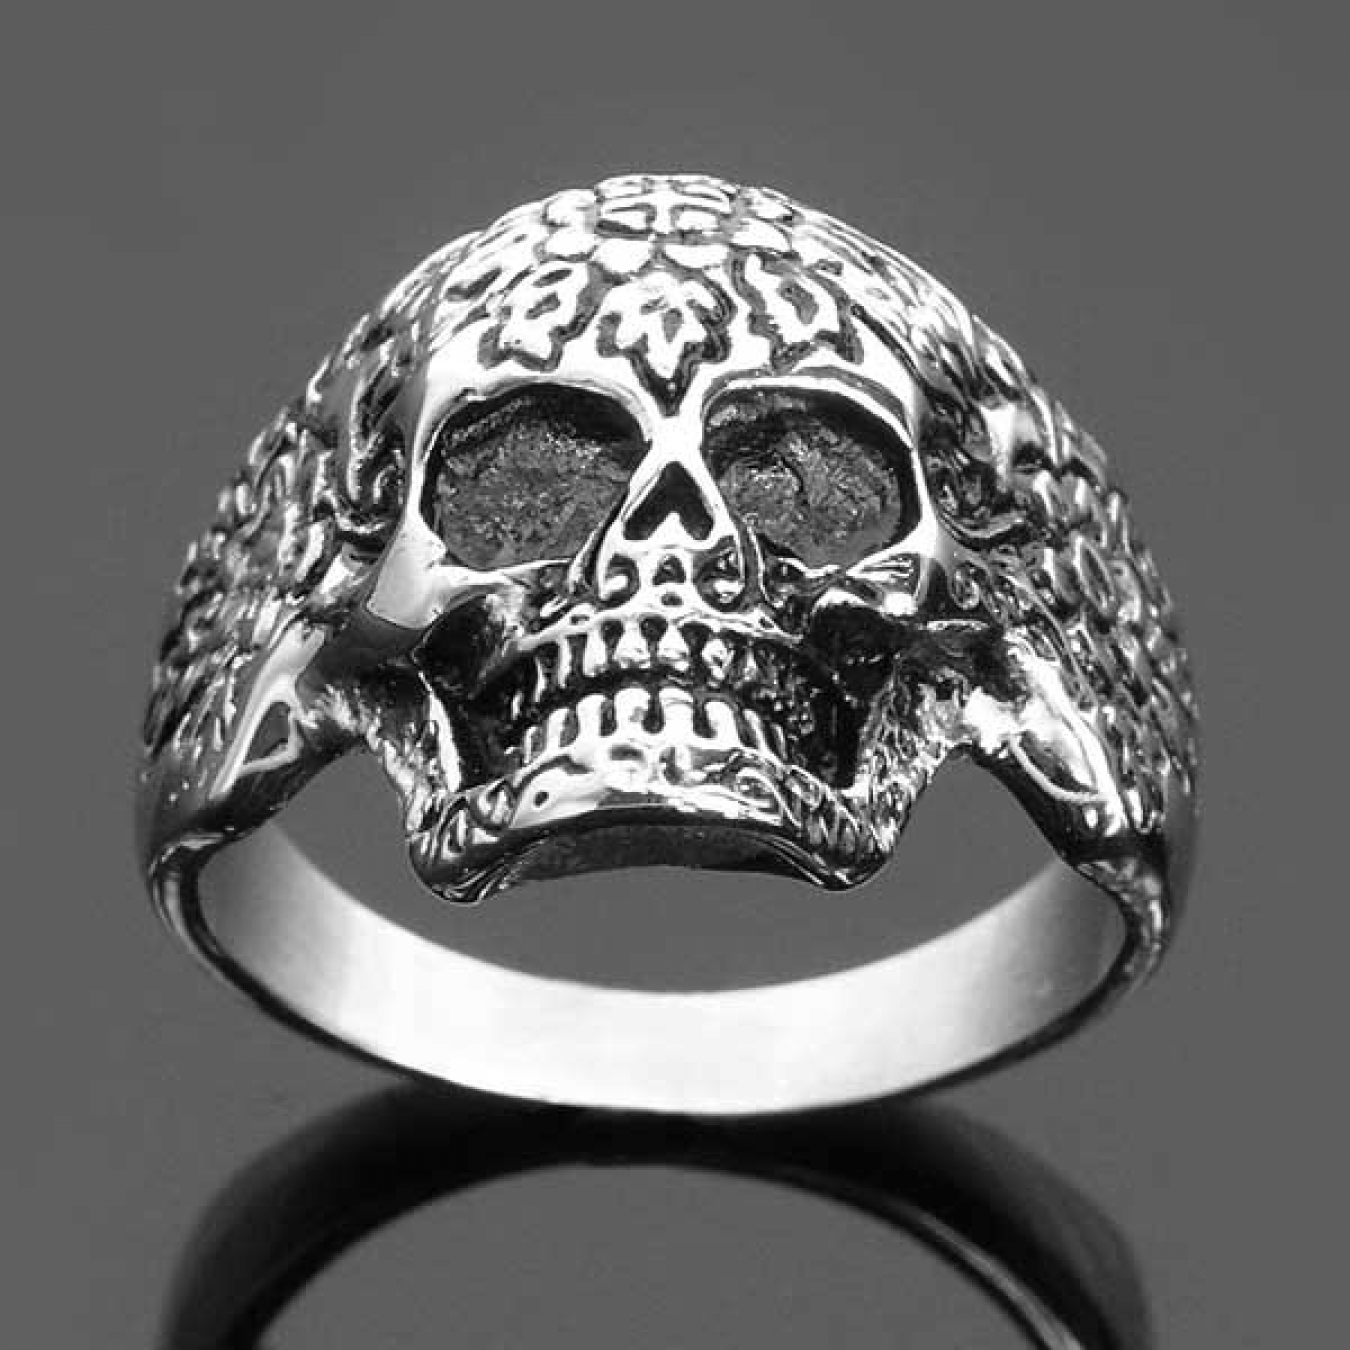 Edelstahl-Ring Totenkopf, Skull, Biker, Gothic | eBay